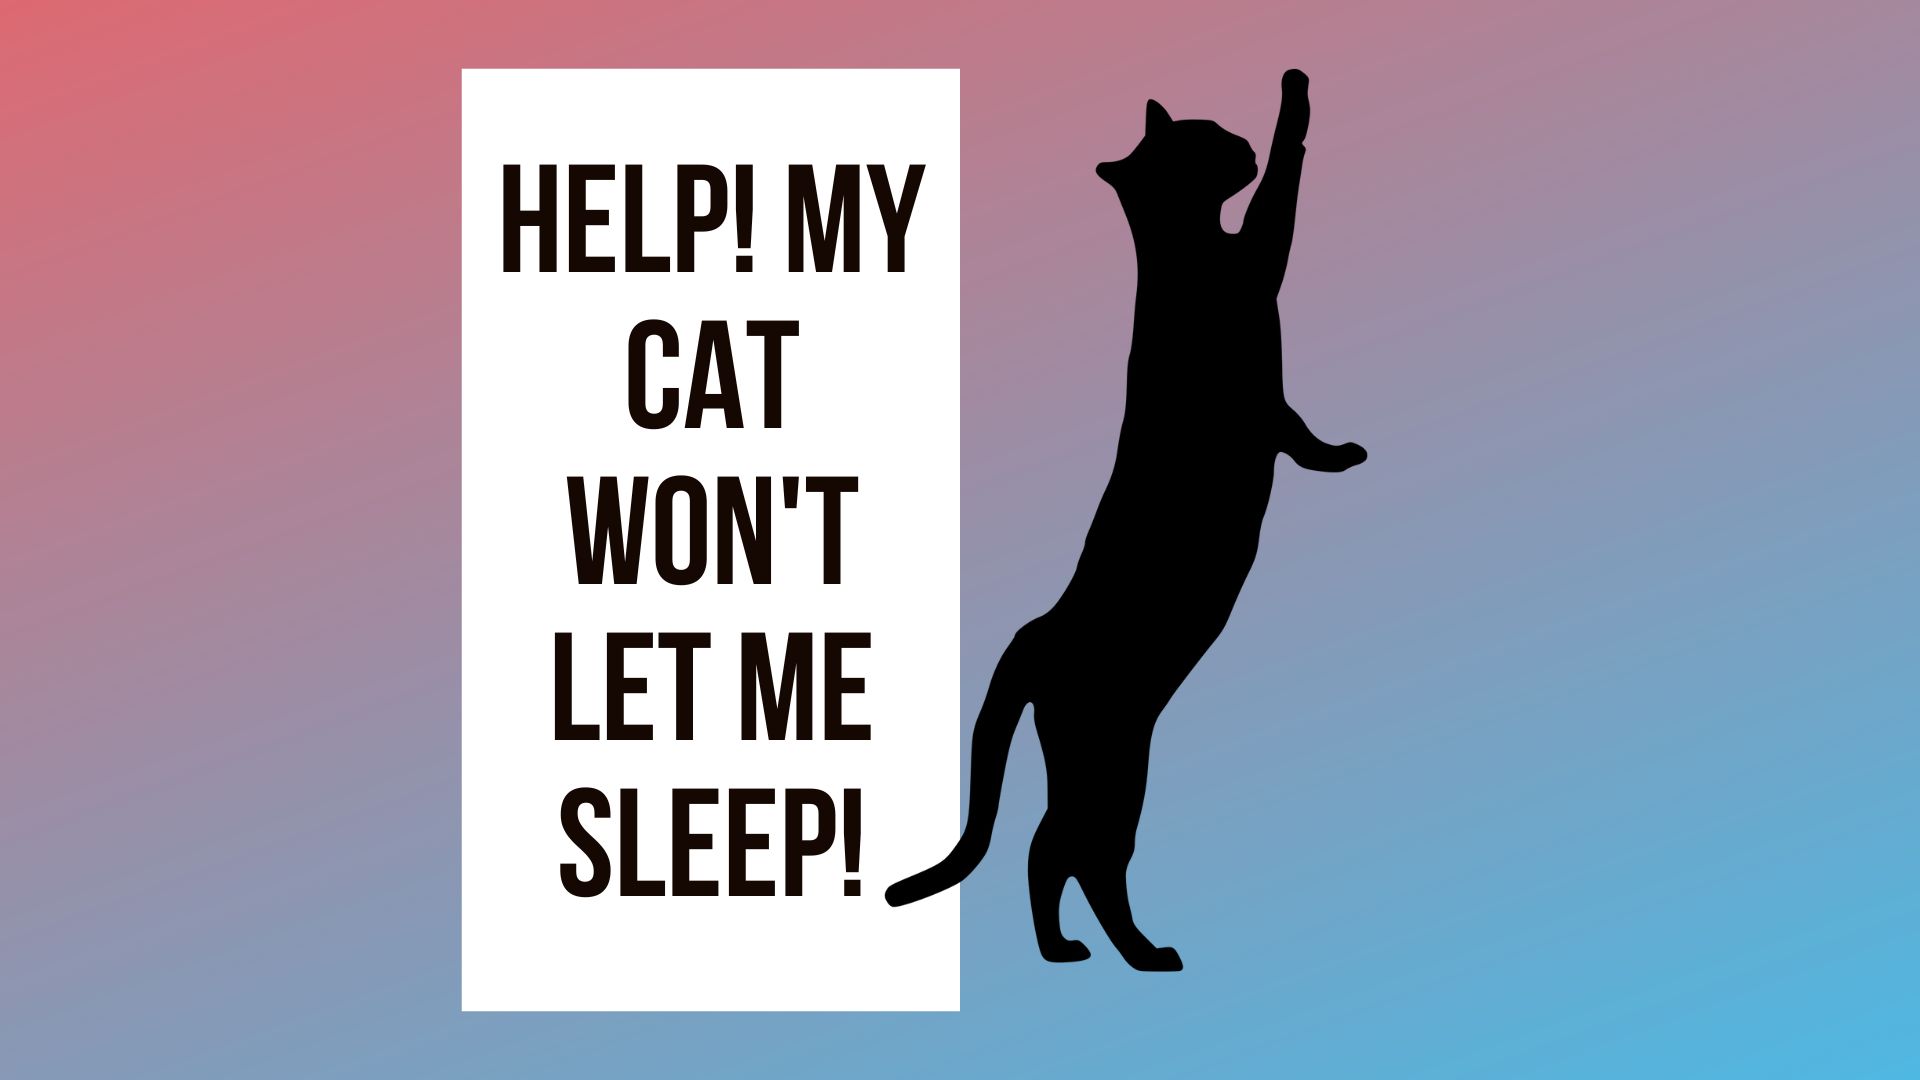 My Cat Won't Let Me Sleep!